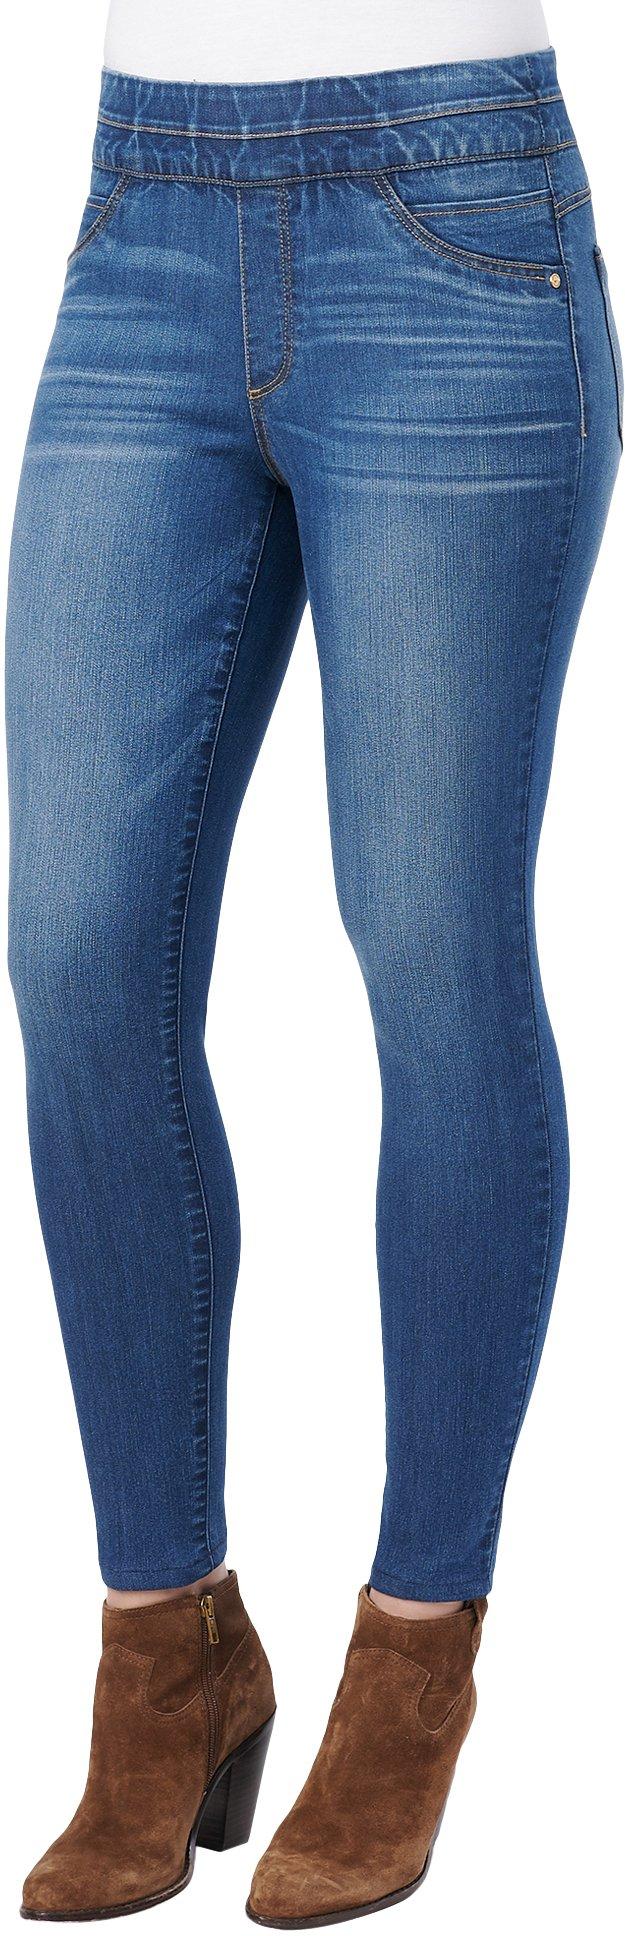 MissMissy Womens Casual Color Denim Pants Skinny Elastic Waist Jeggings Ankle Jeans